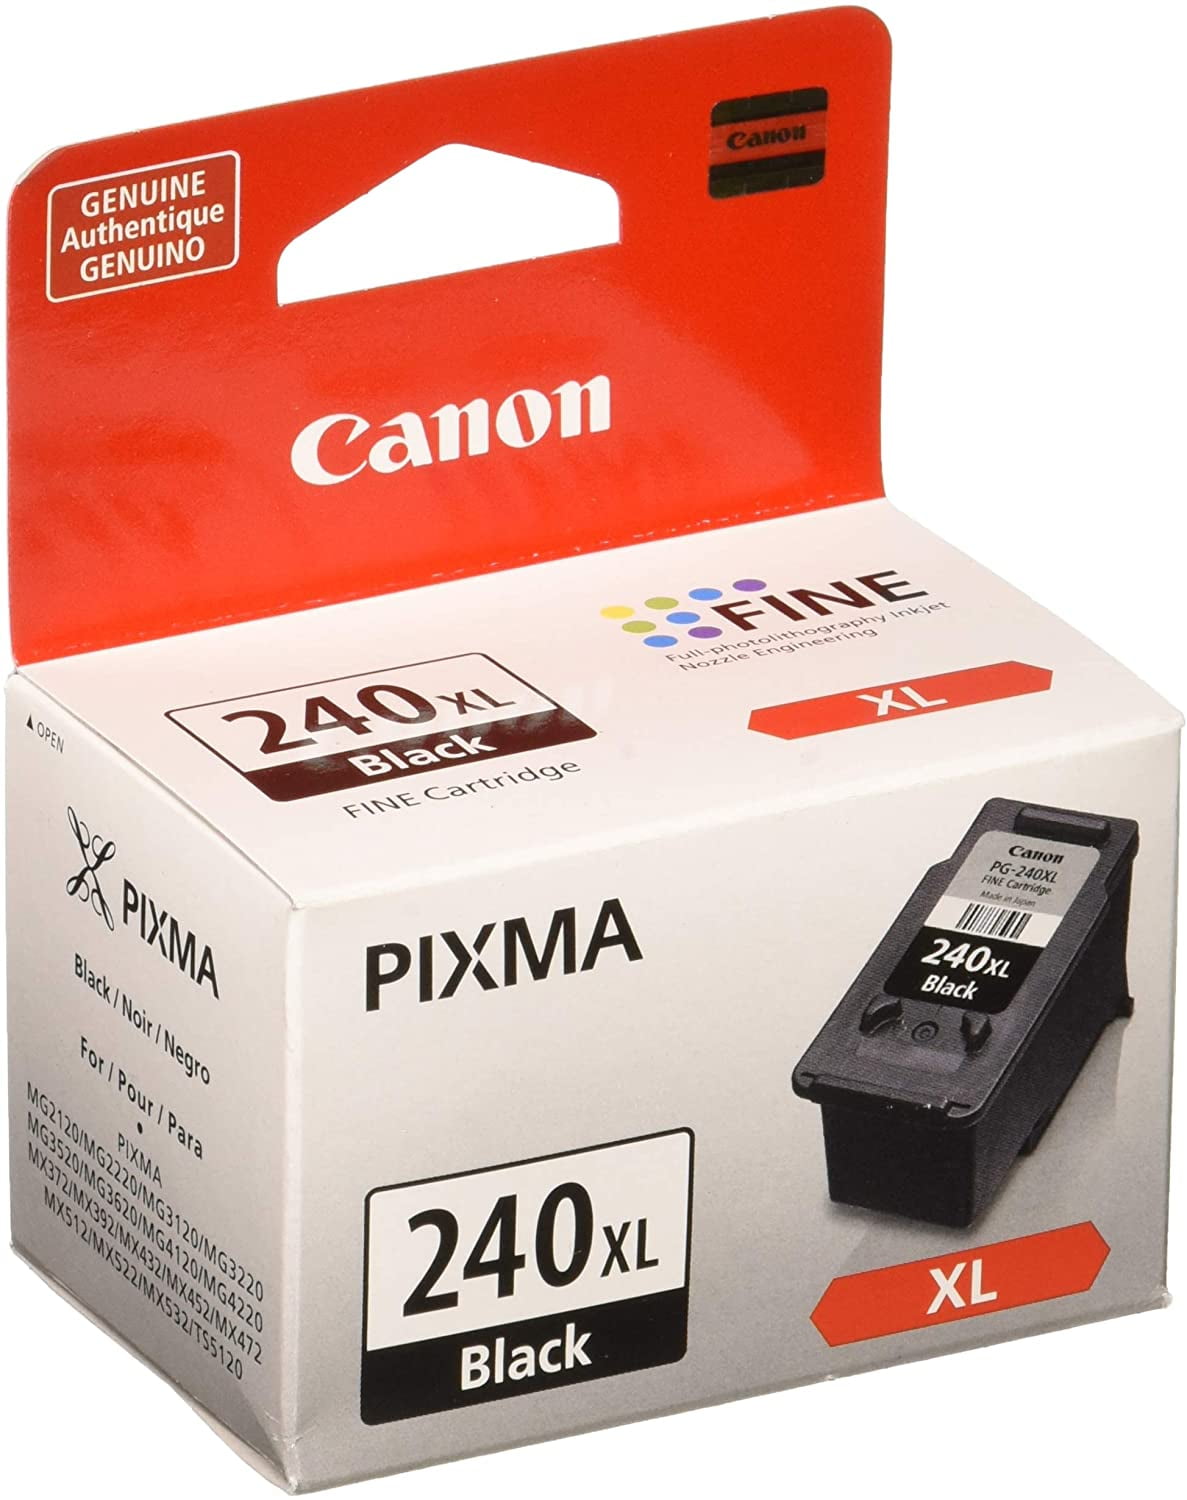 2PK PG-240XL Black Ink for Canon PIXAM MG2120 MG2140 MG222 MG3120 Printers